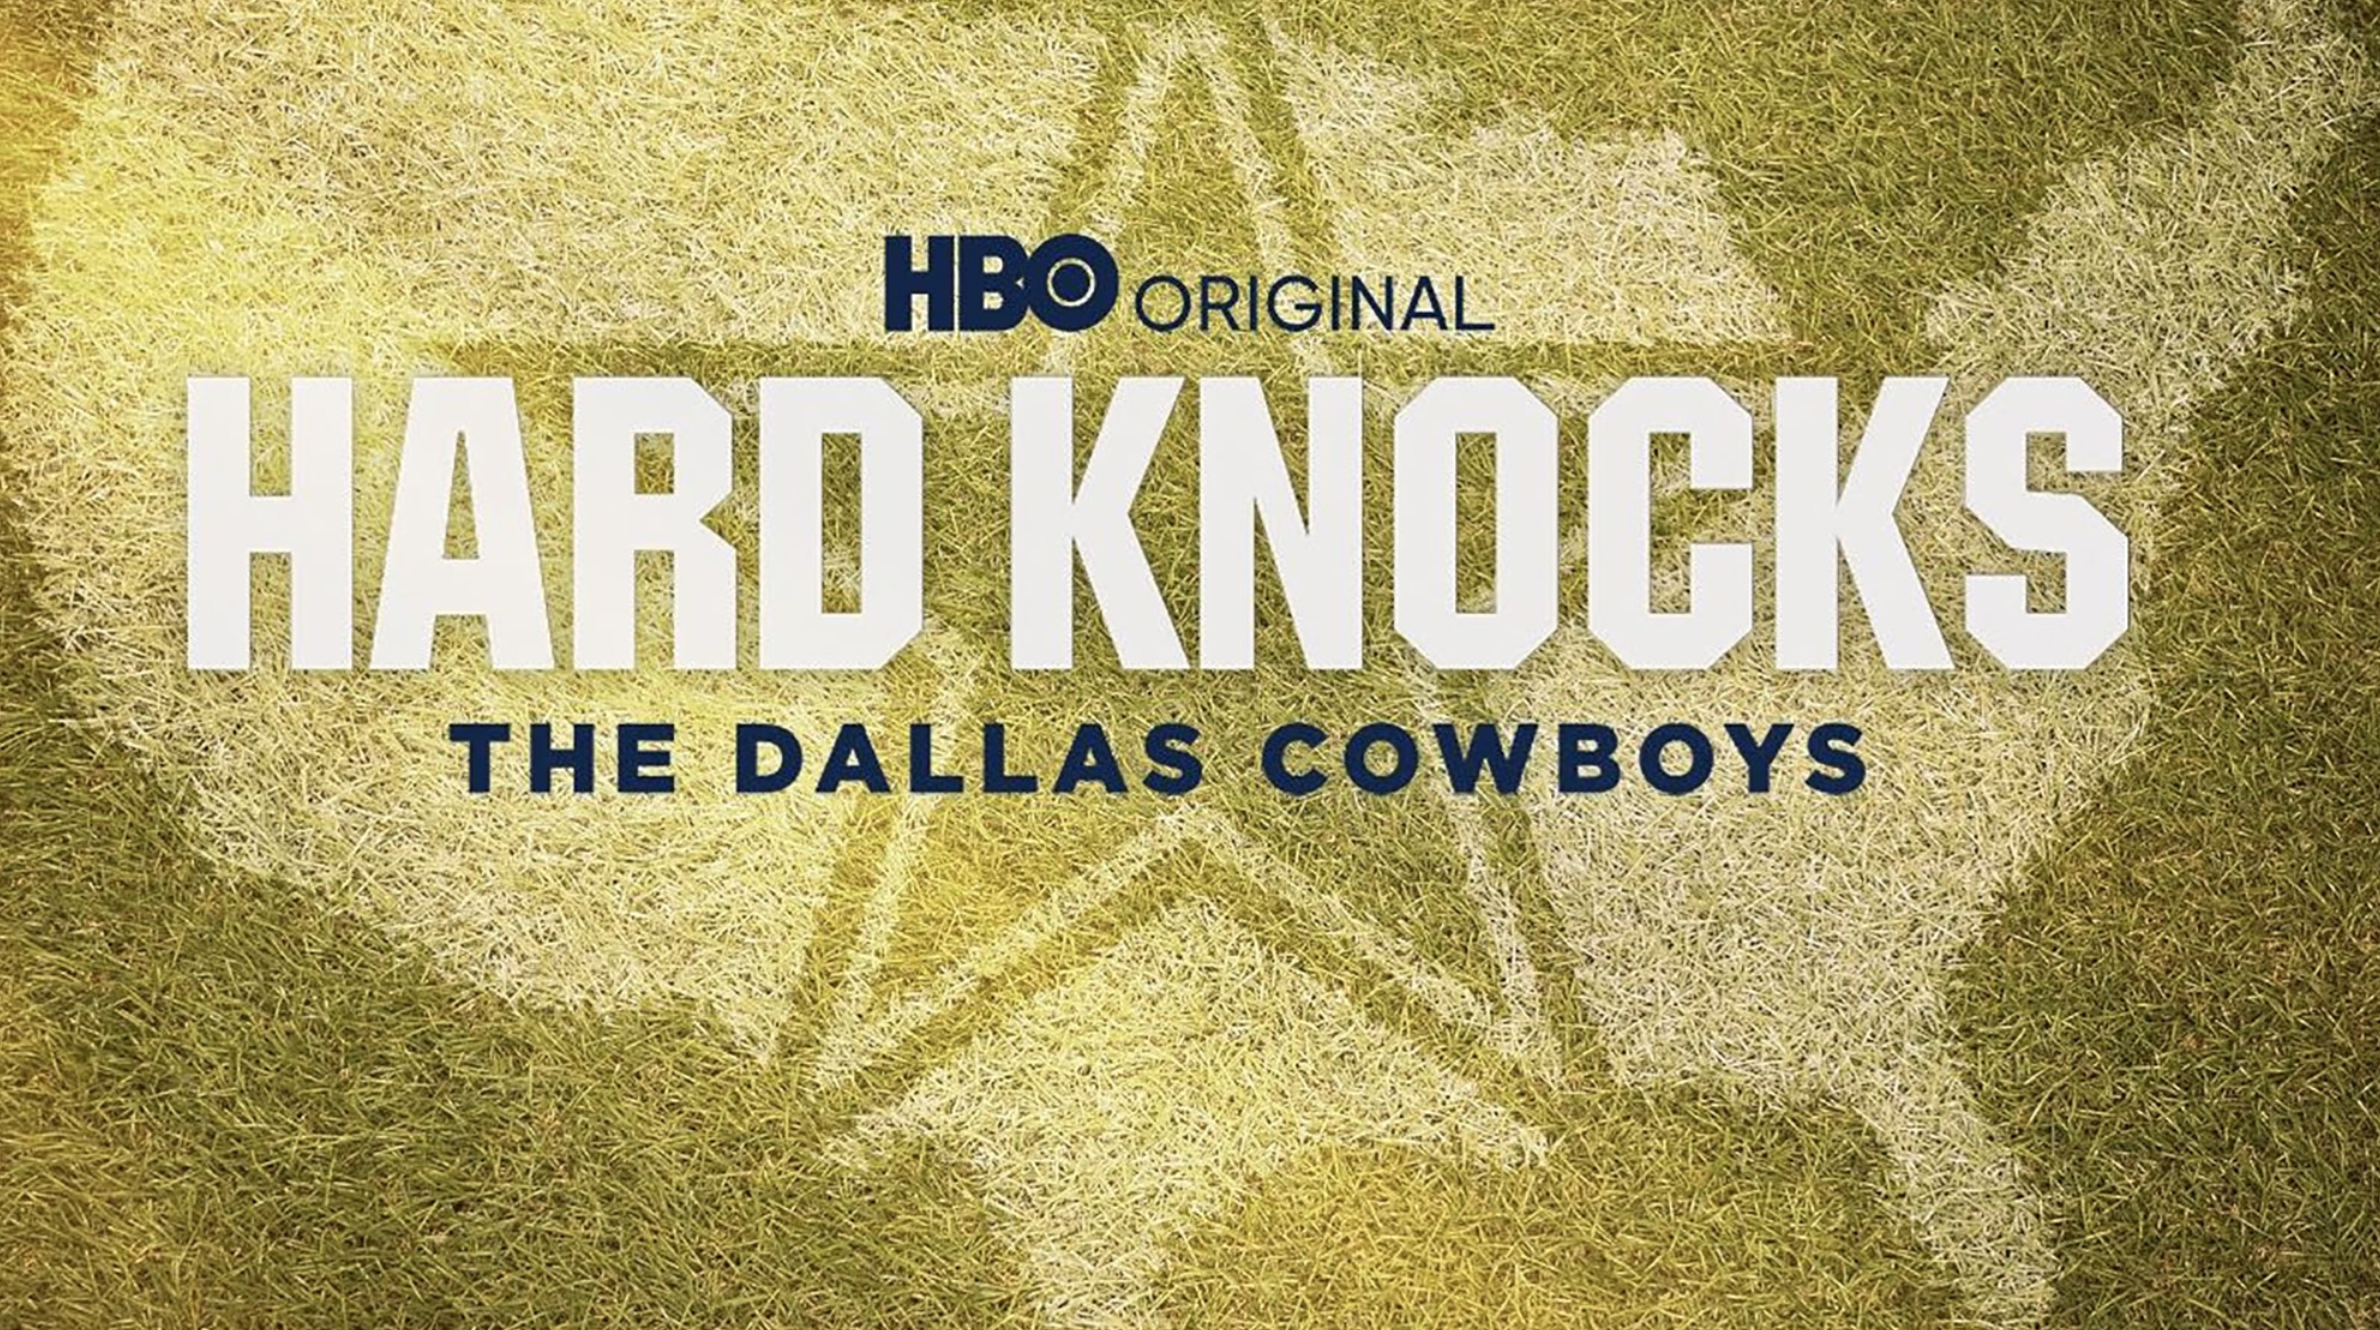 HBO - Hard Knocks: The Dallas Cowboys